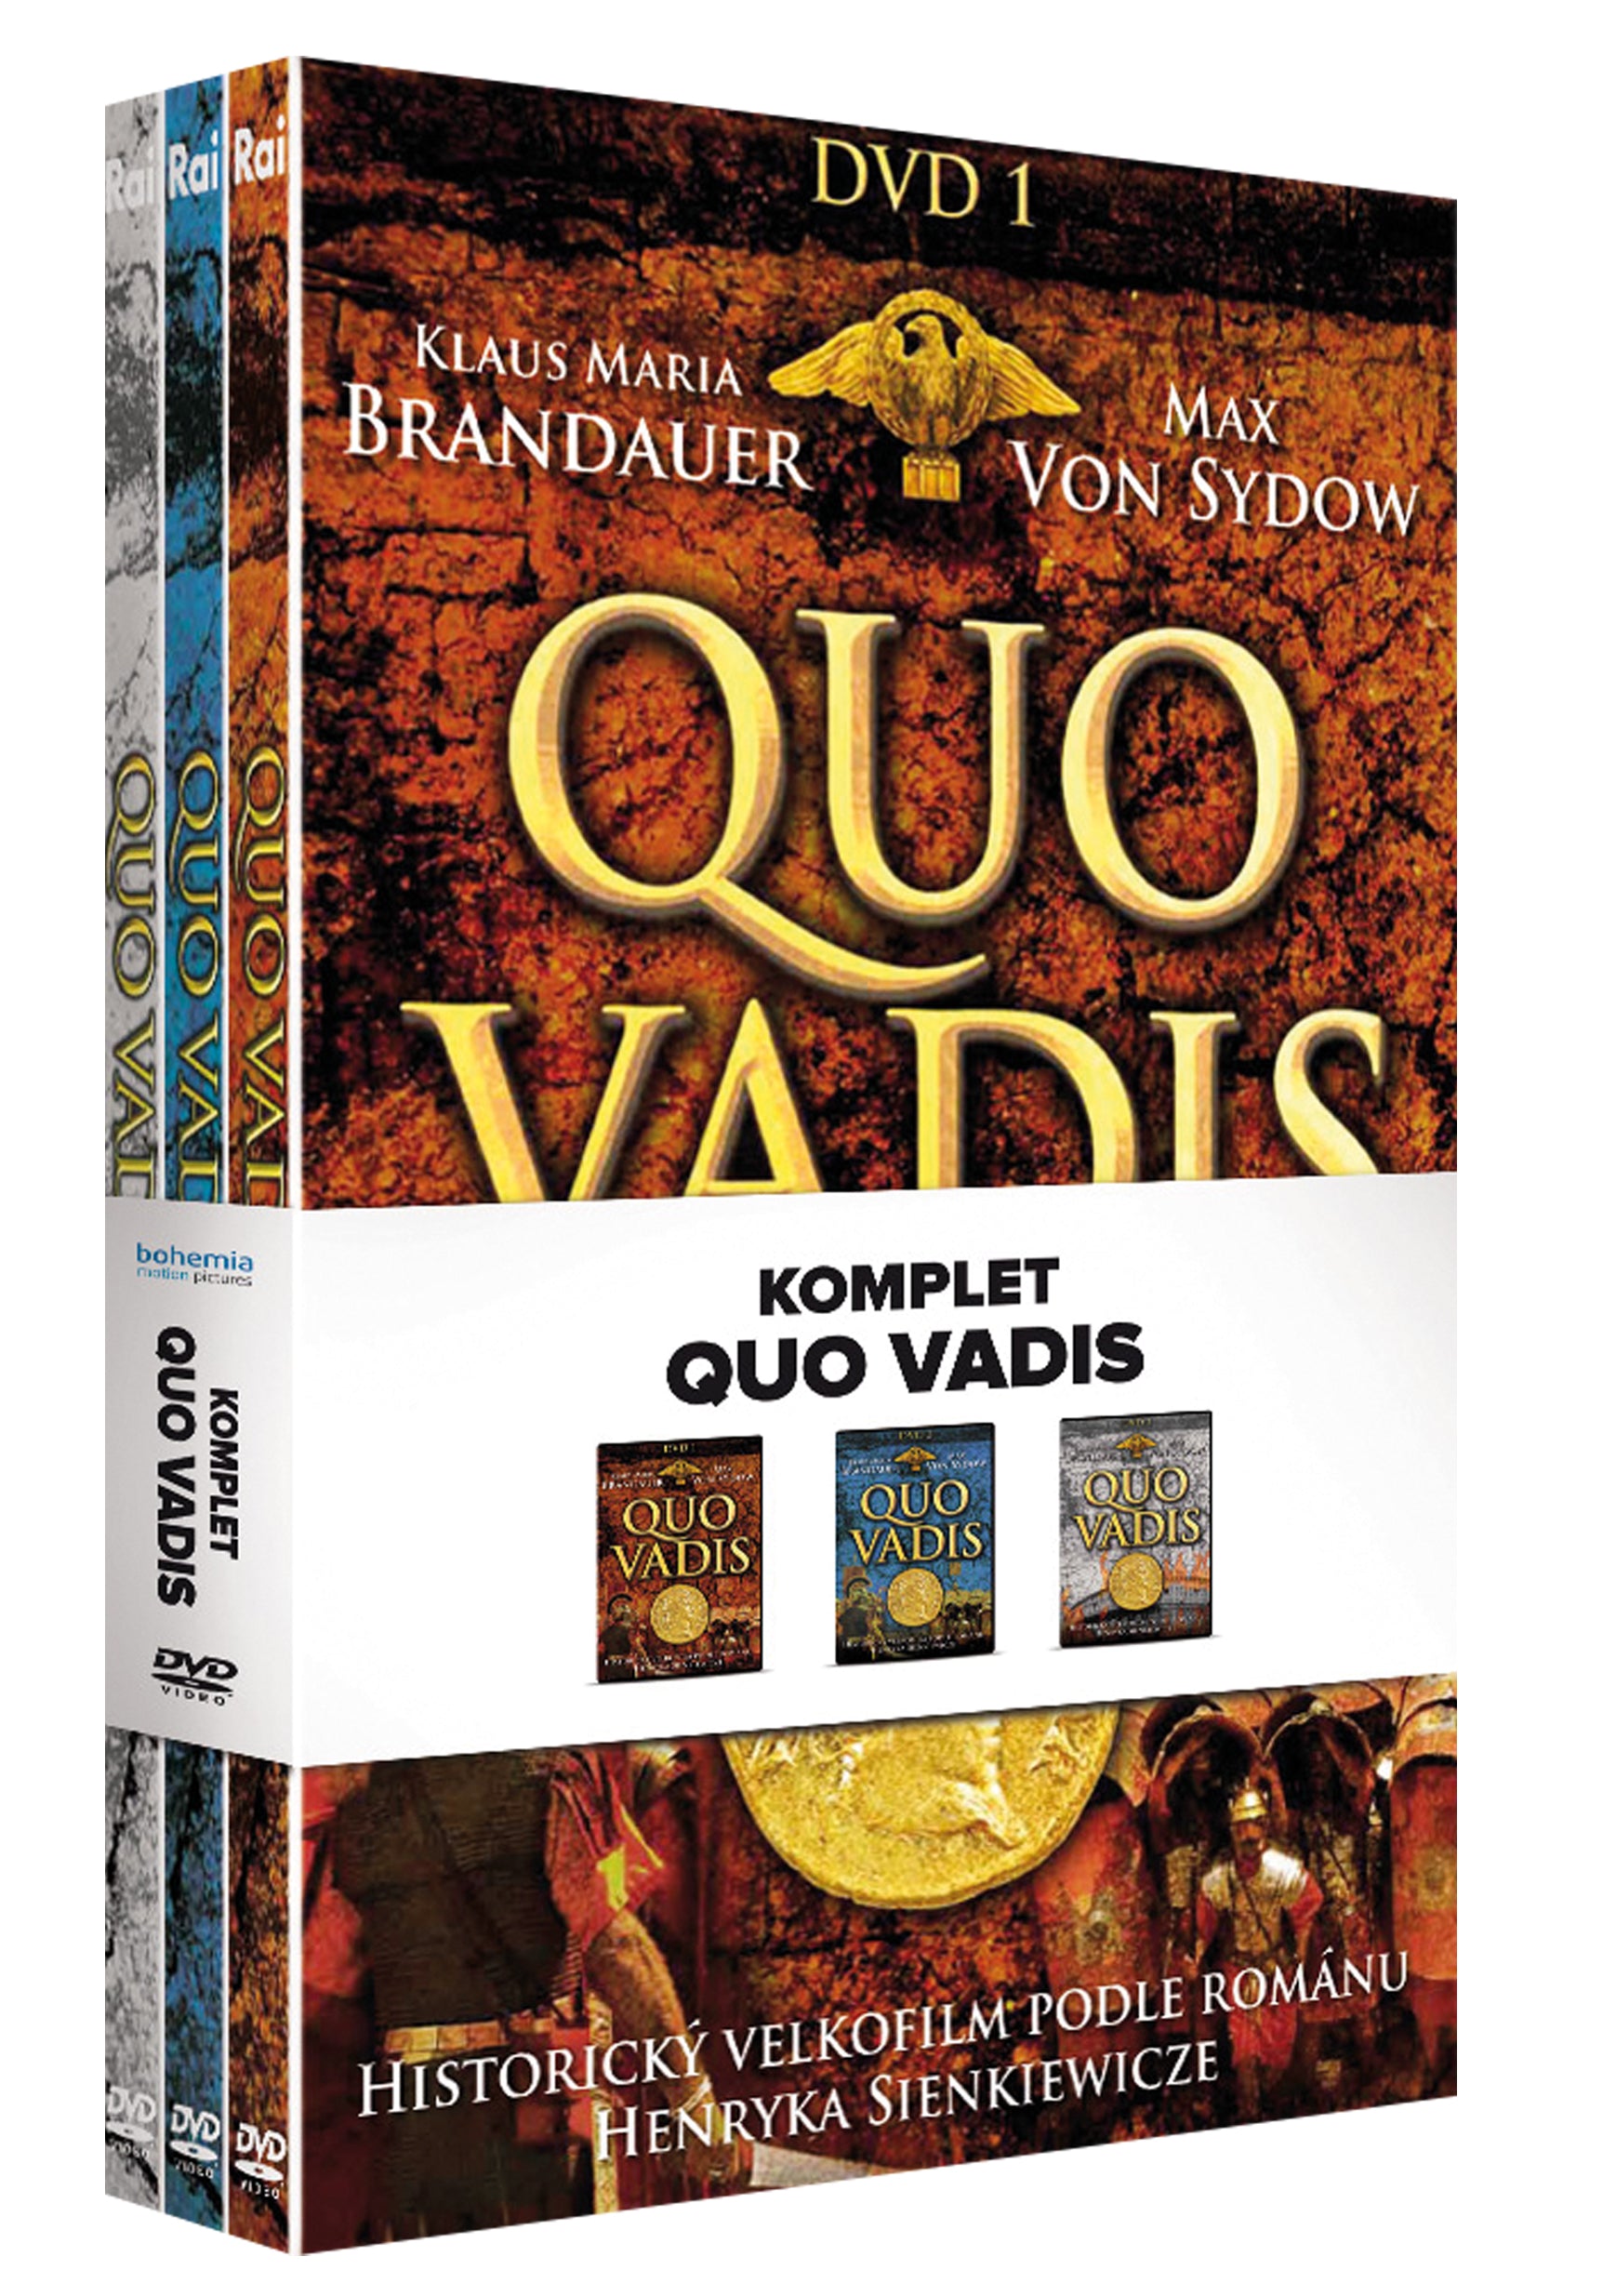 Komplet Quo vadis DVD / Quo Vadis